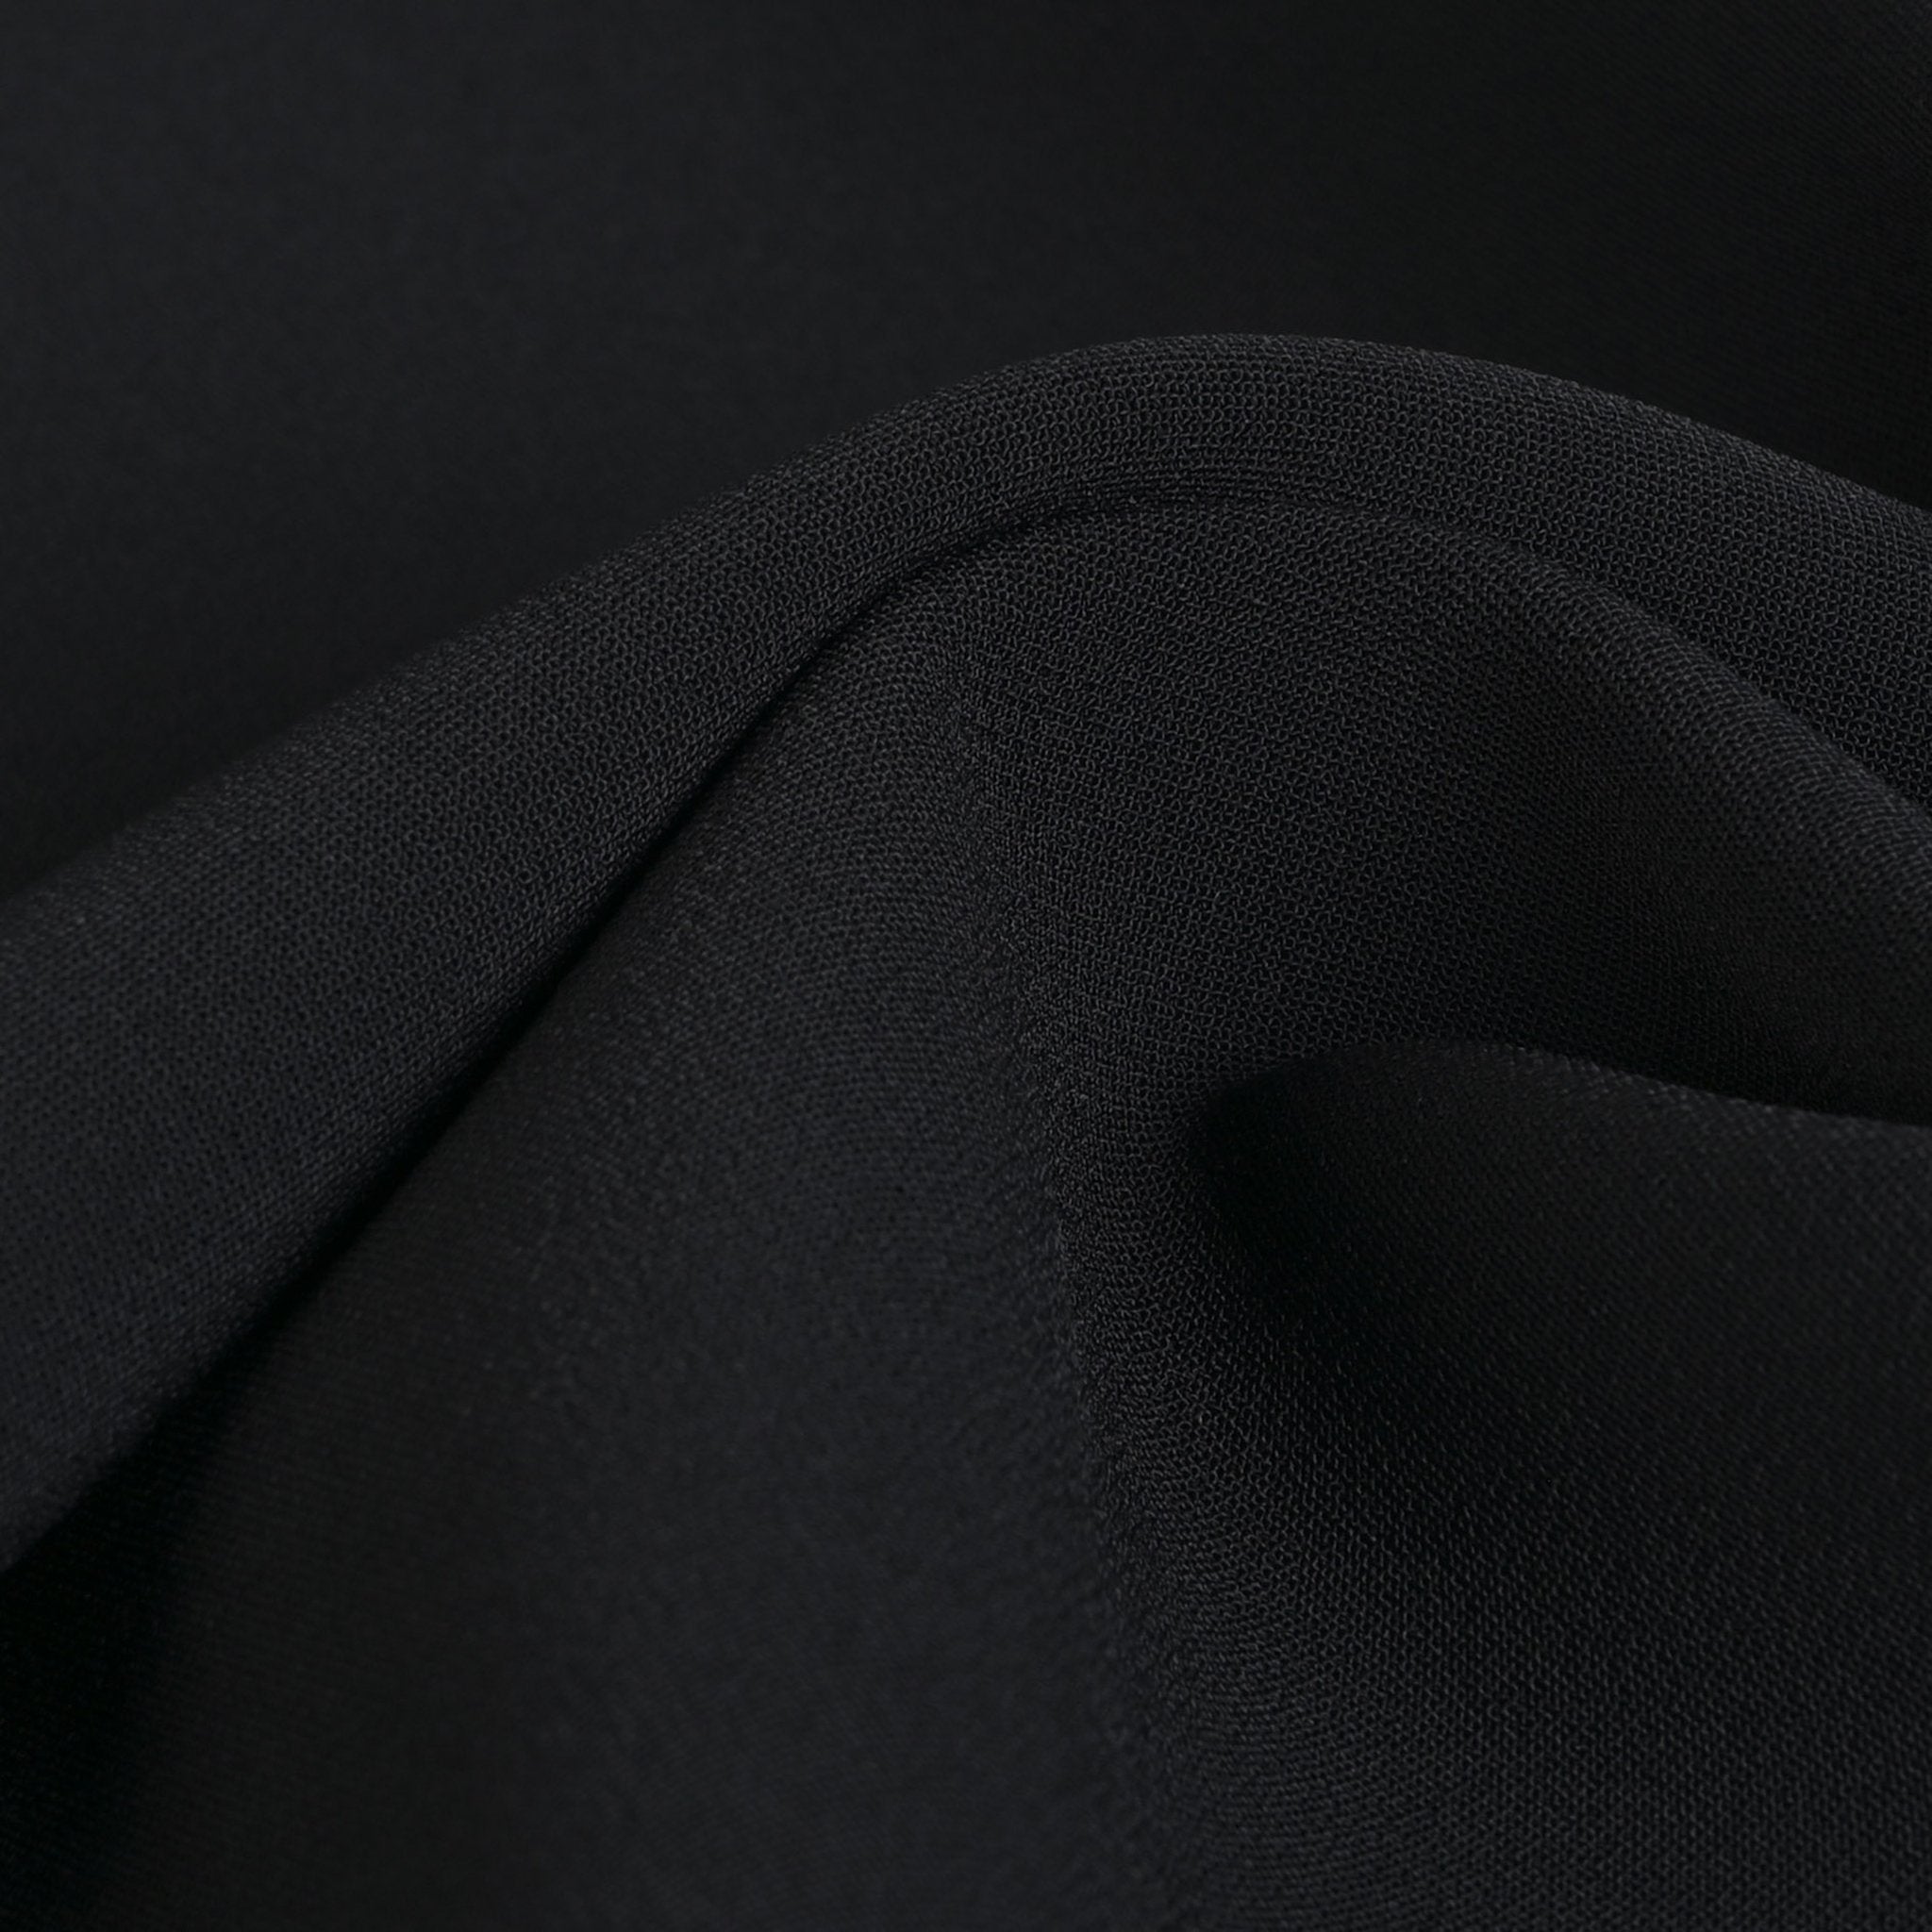 Black Crepe Fabric 3094